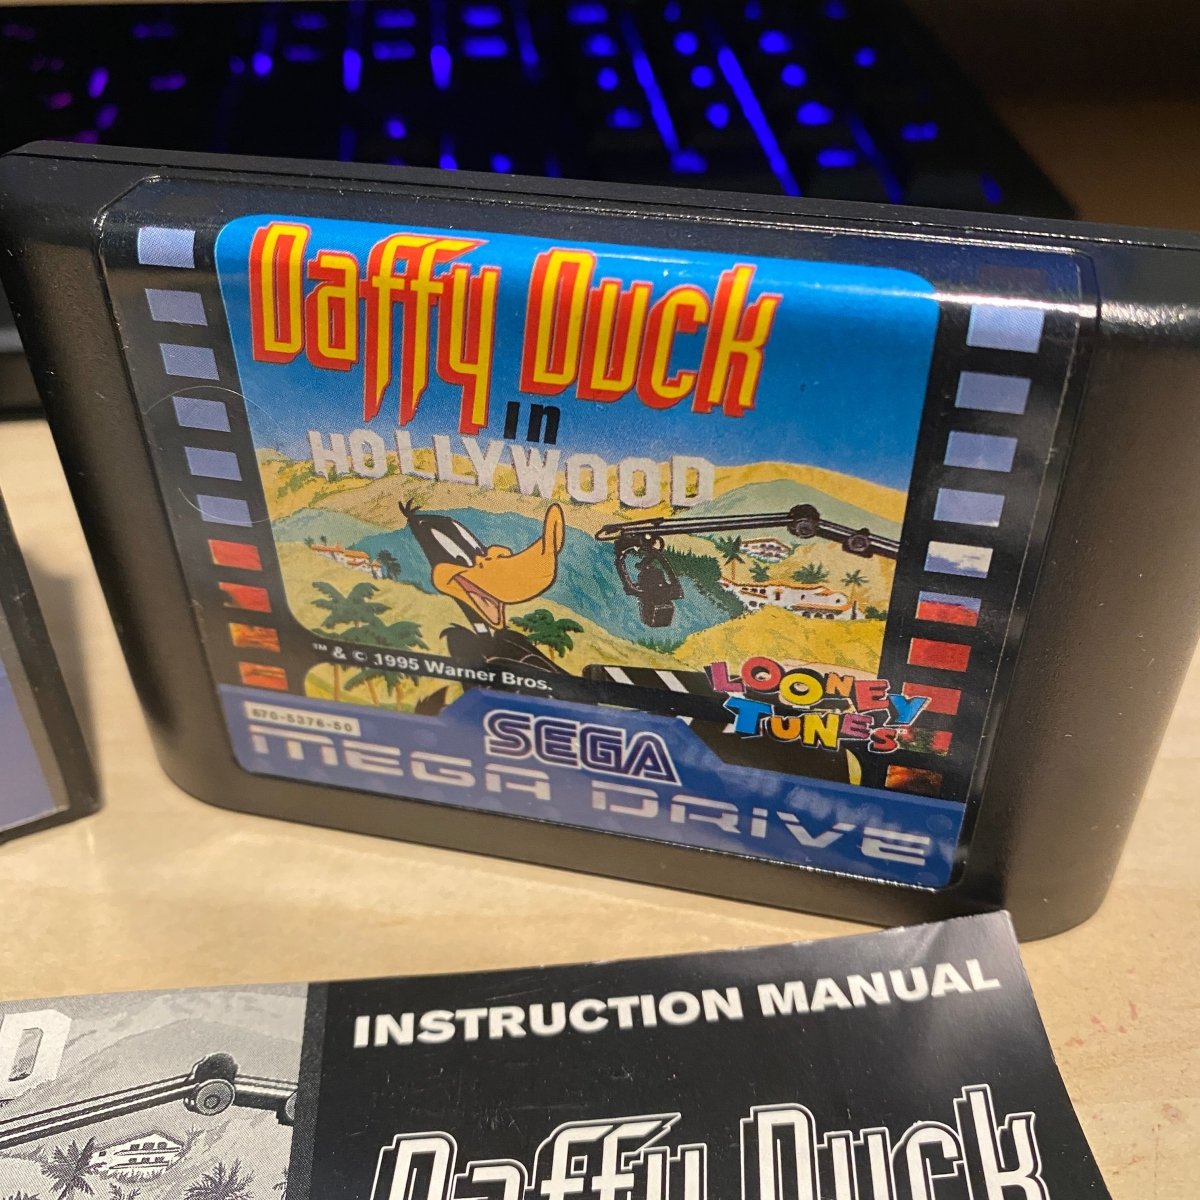 Buy Daffy Duck in Hollywood sega megadrive game complete -@ 8BitBeyond